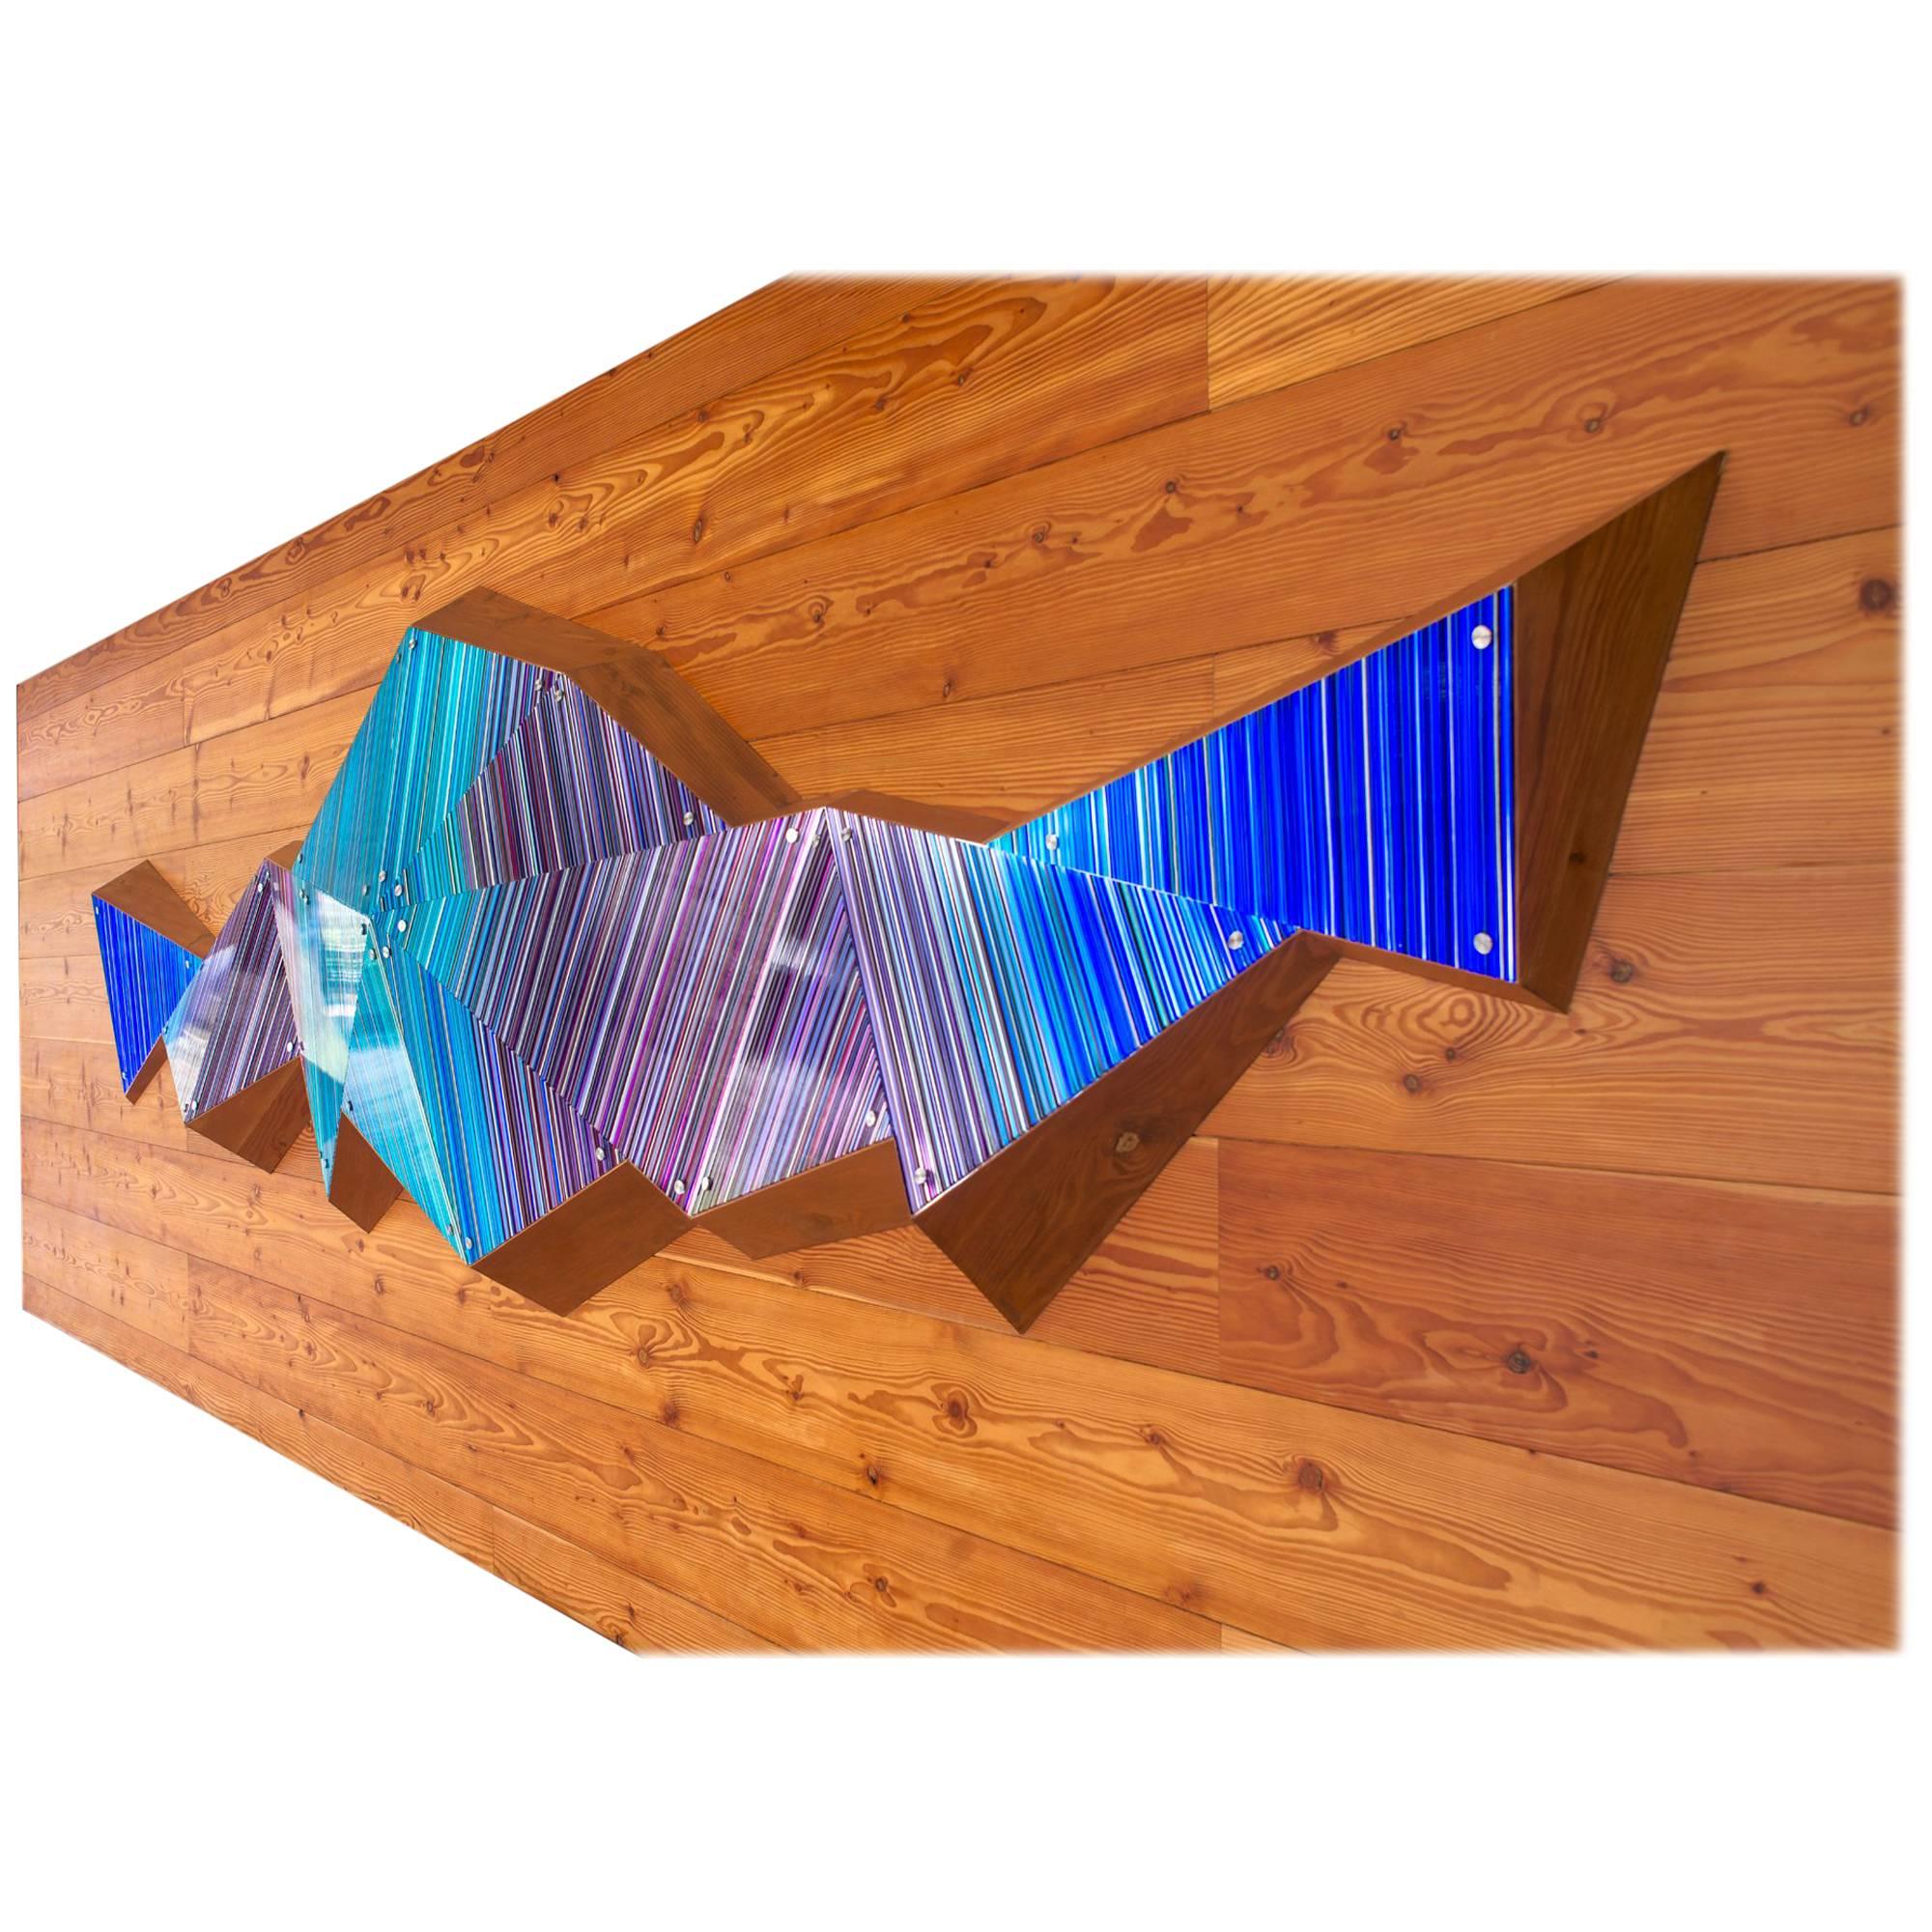 Purple Blue Scheme 3D Faceted Glass Barcode Sculpture Wall Light Installation For Sale